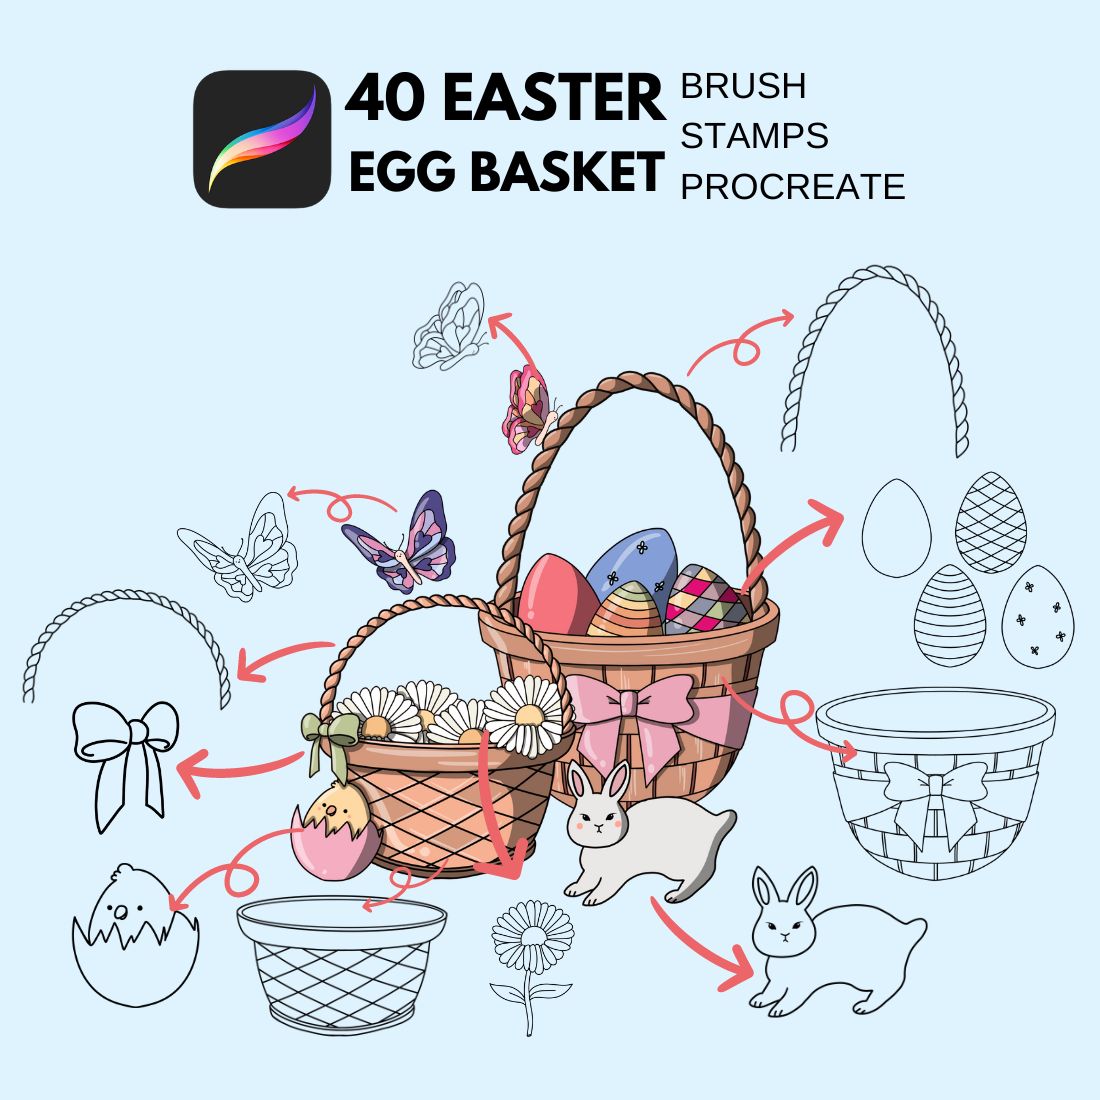 40 Easter Egg Basket - Brush Stamps procreate preview image.